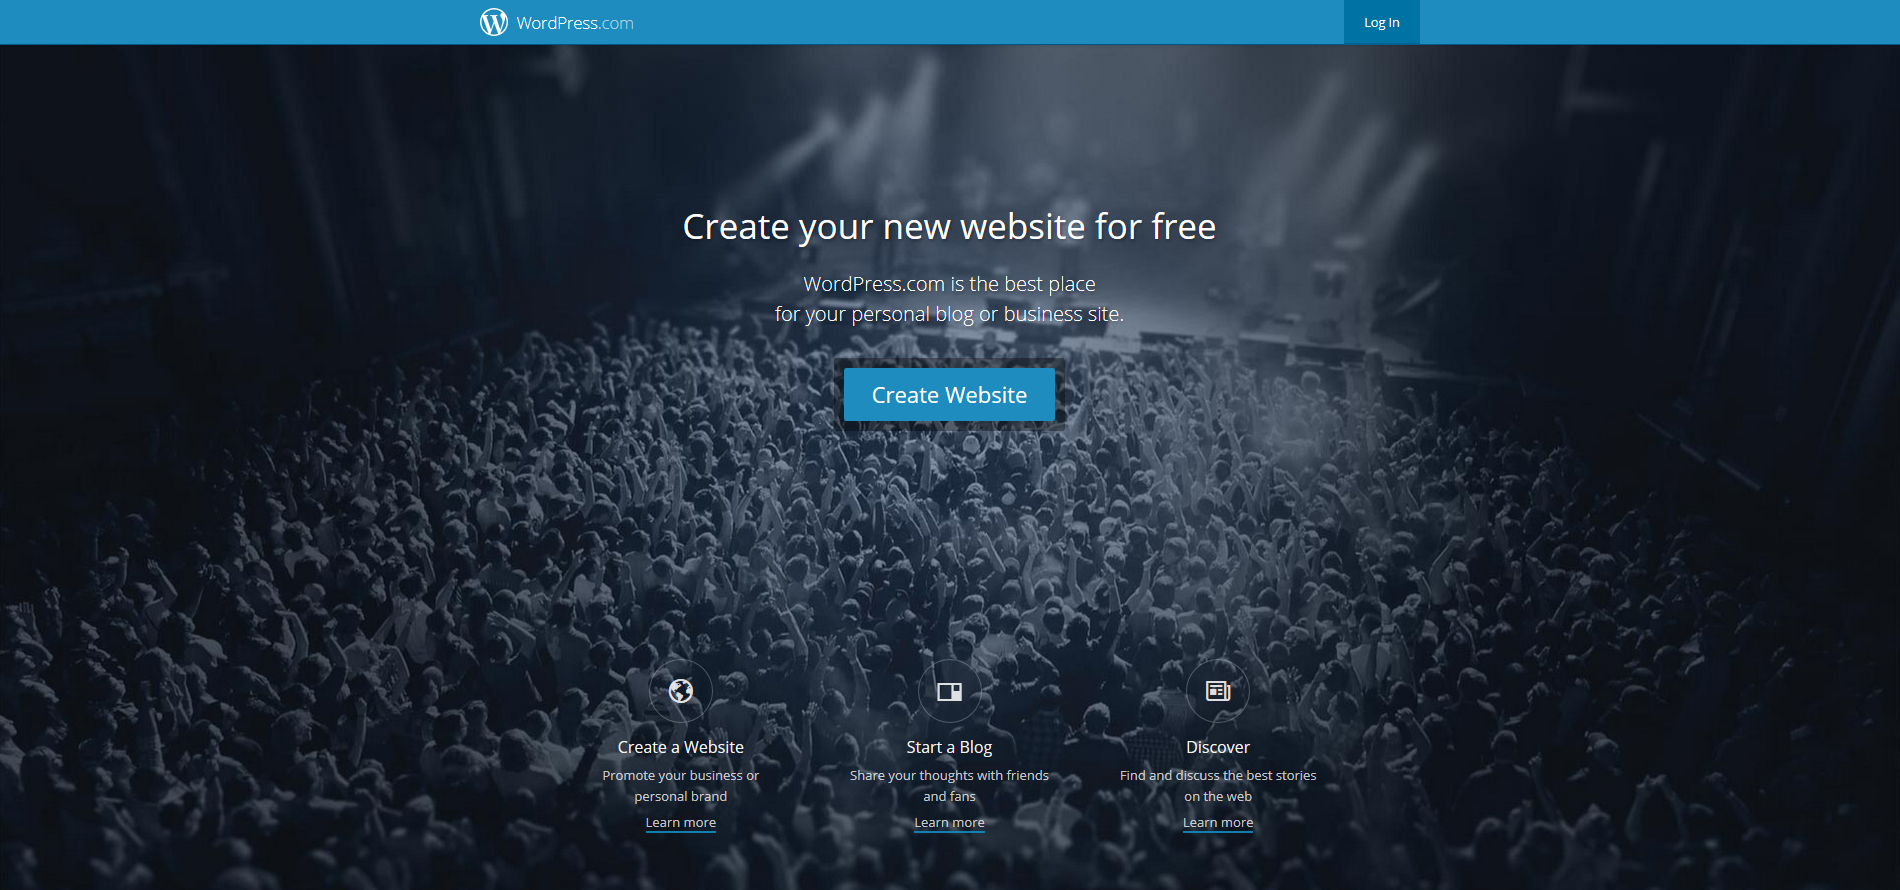 The home screen of WordPress.com